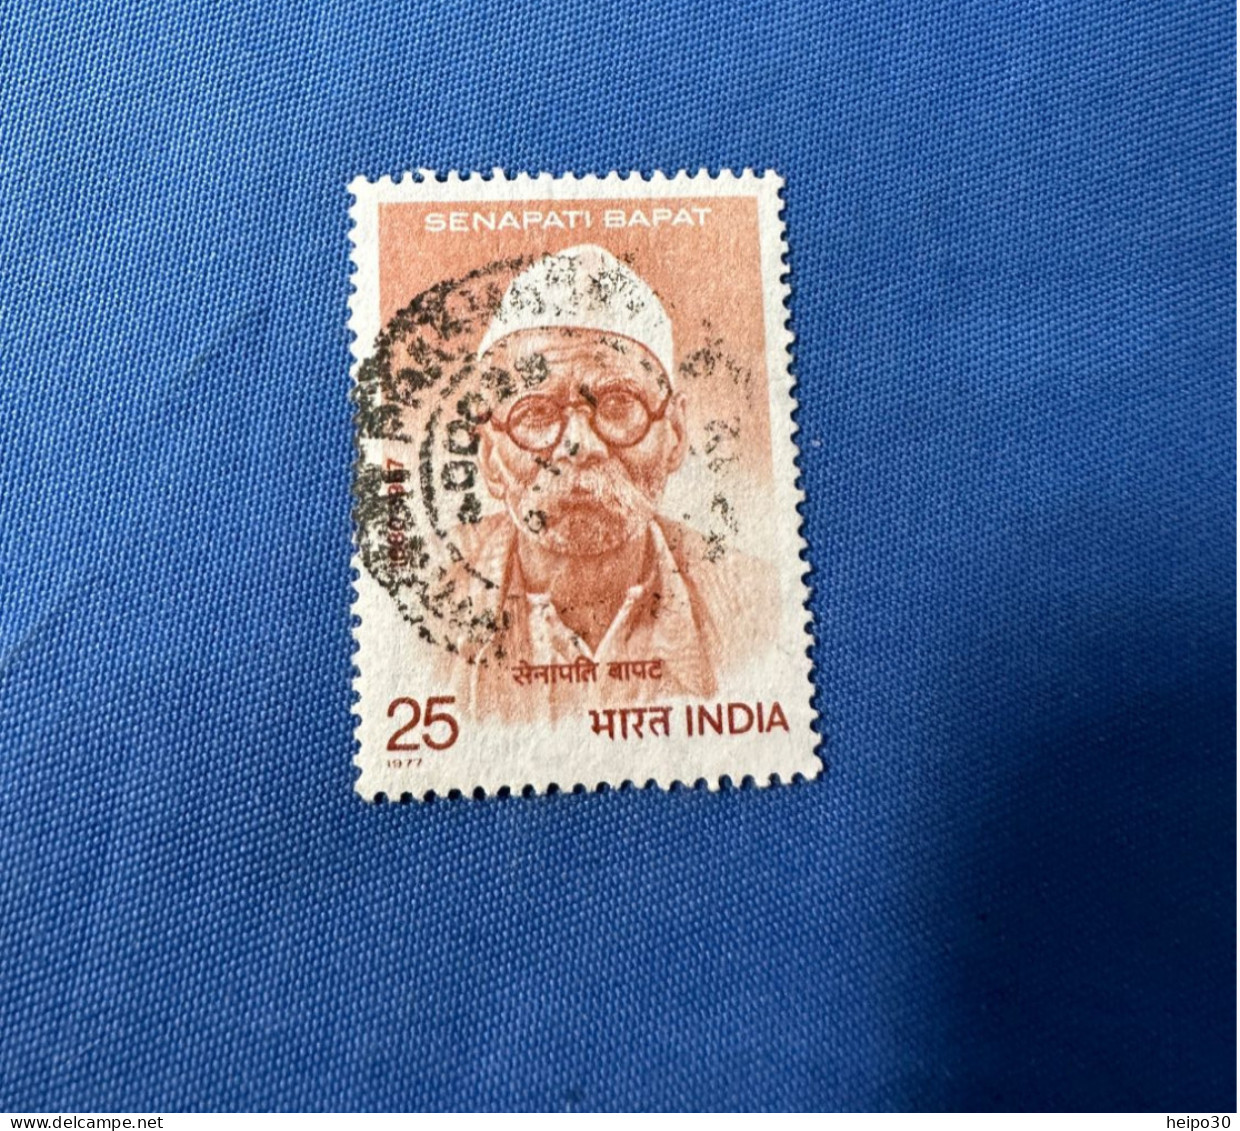 India 1977 Michel 743 Senapati Bapat - Used Stamps